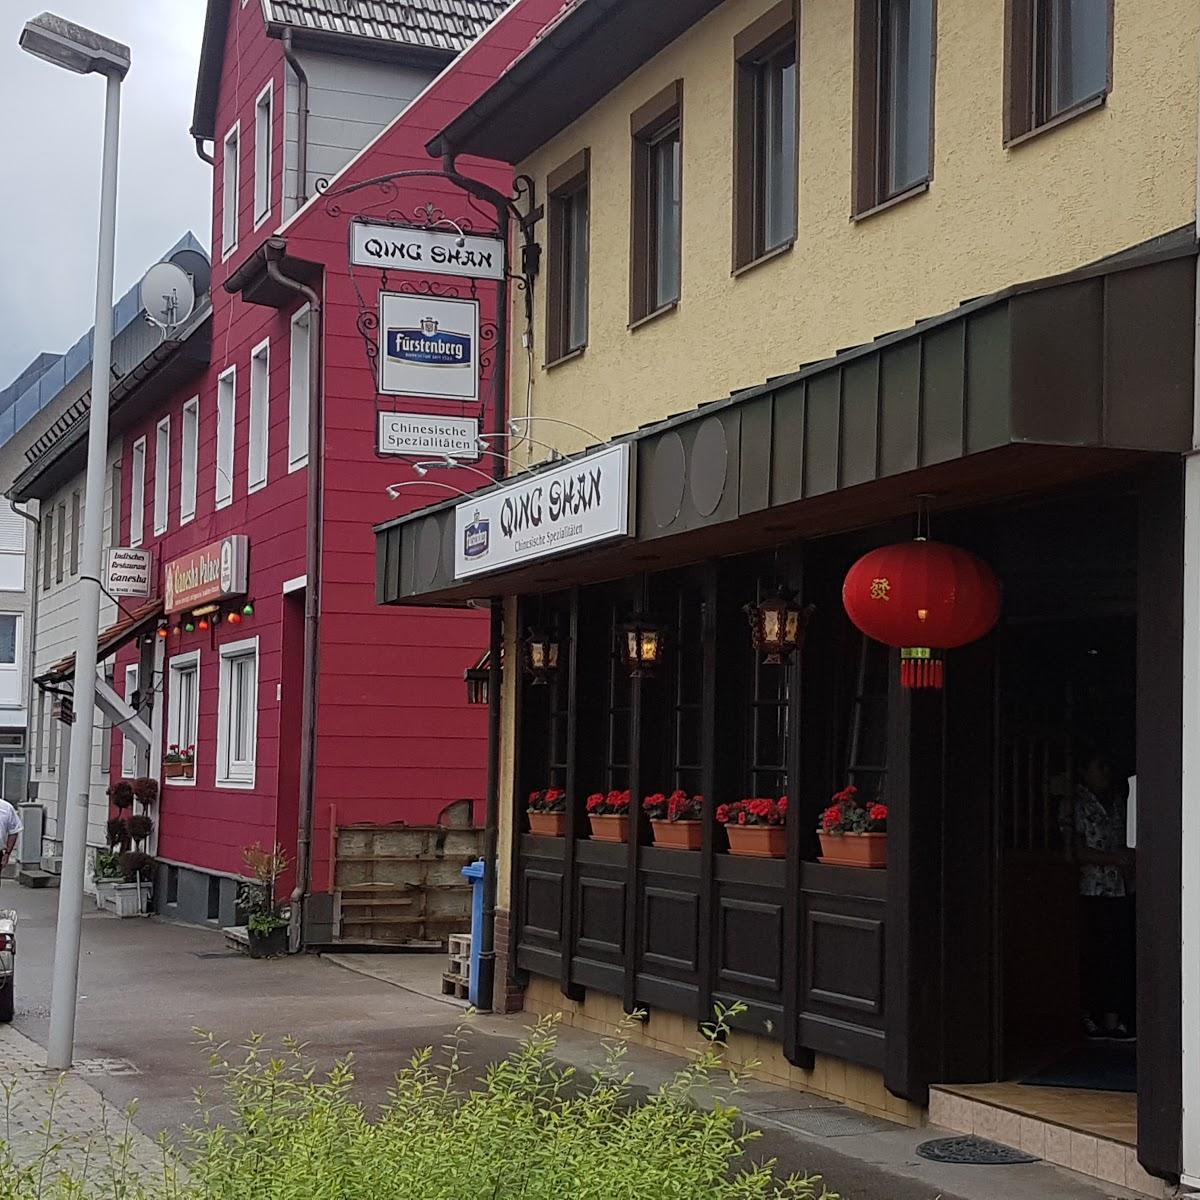 Restaurant "Restaurant Qing Shan" in  Albstadt